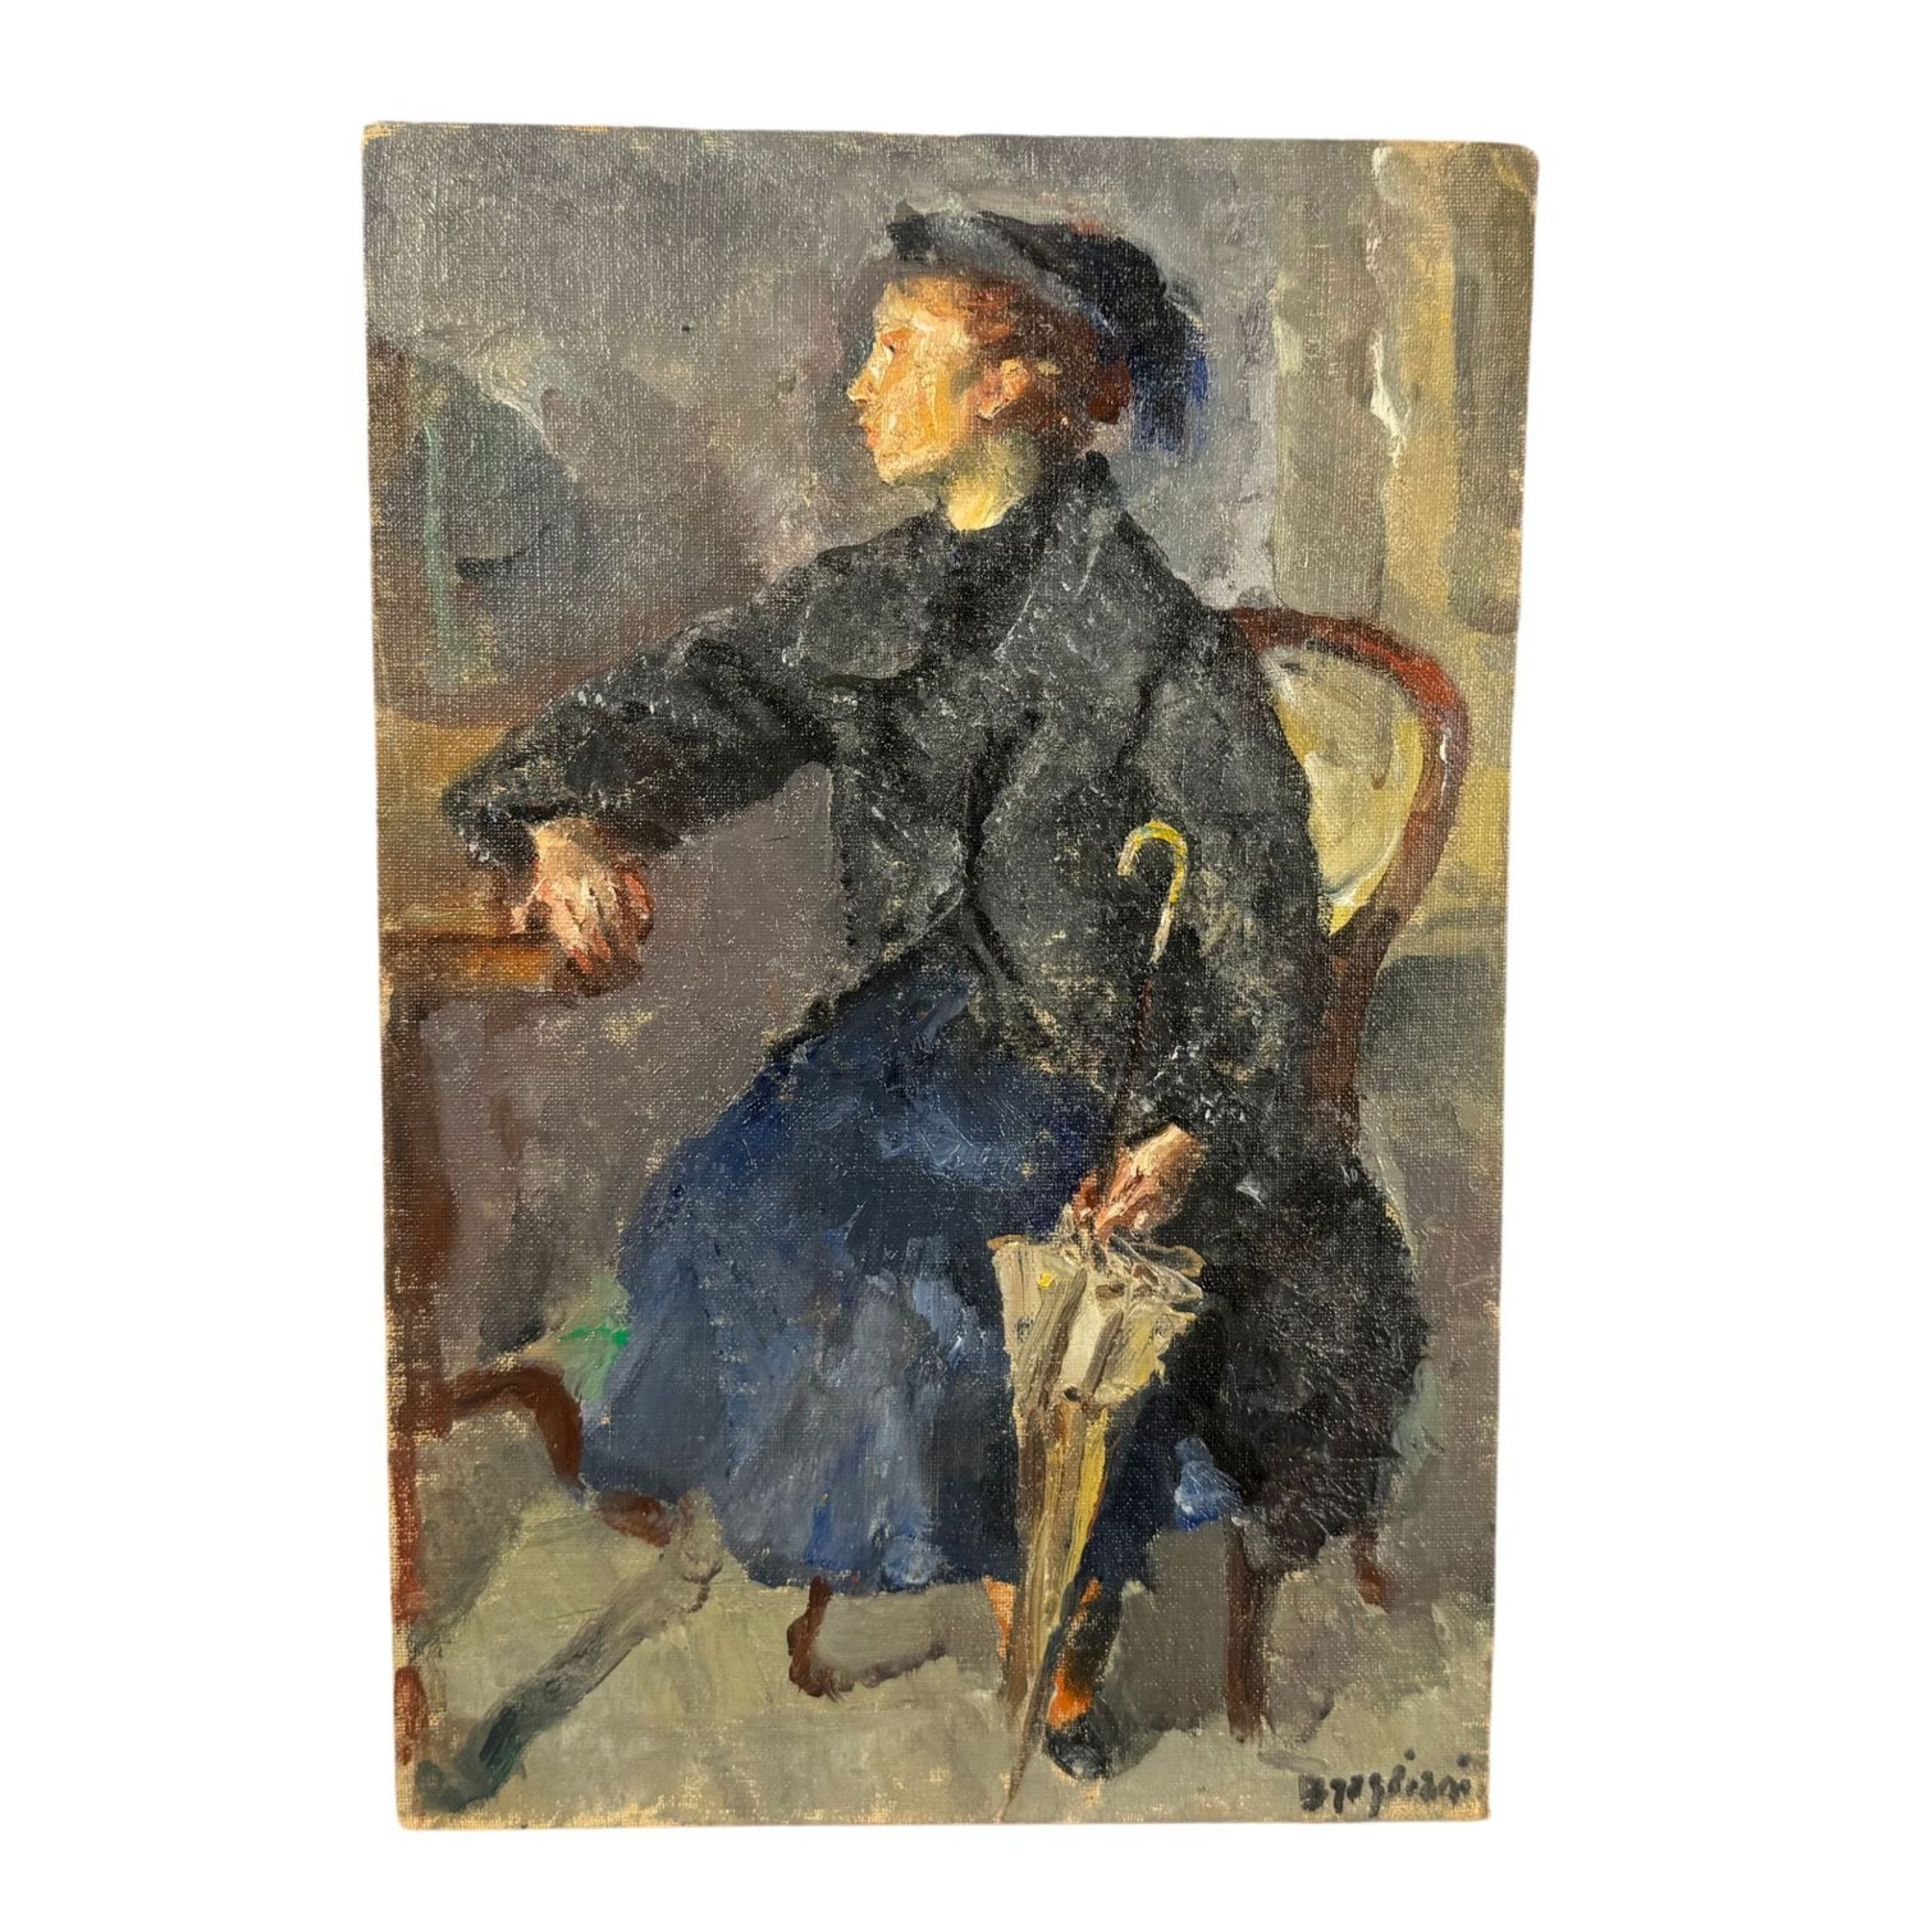  A. Bresciani - Woman with a parasol